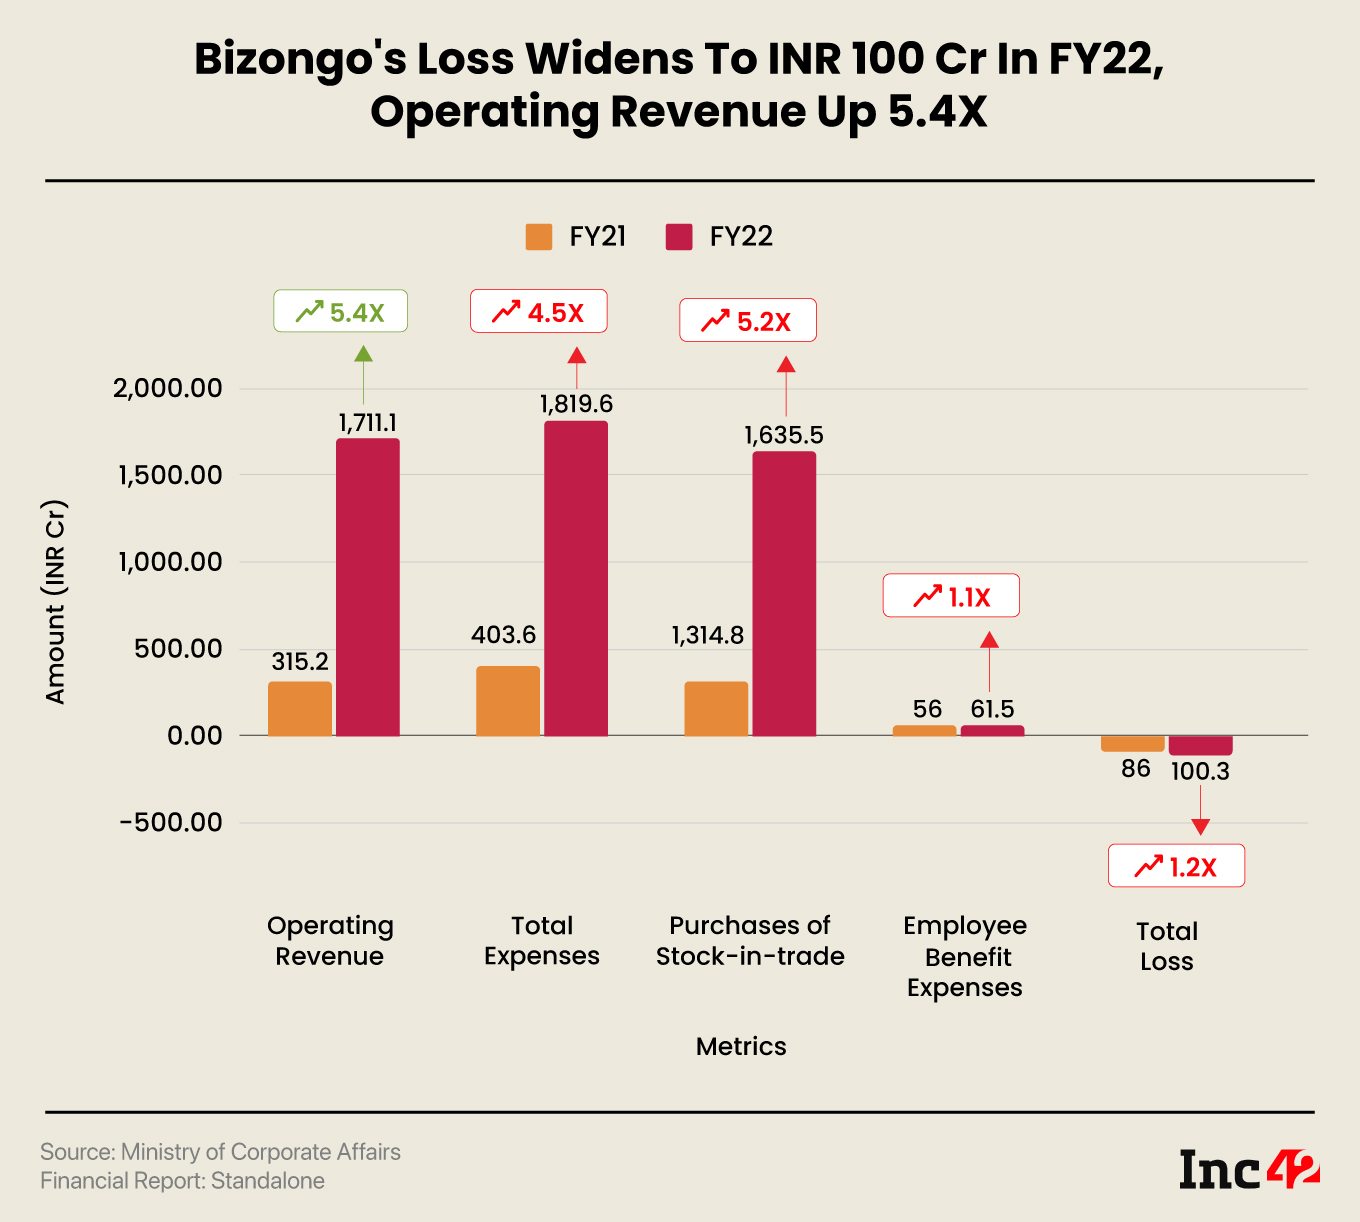 Bizongo's loss widens